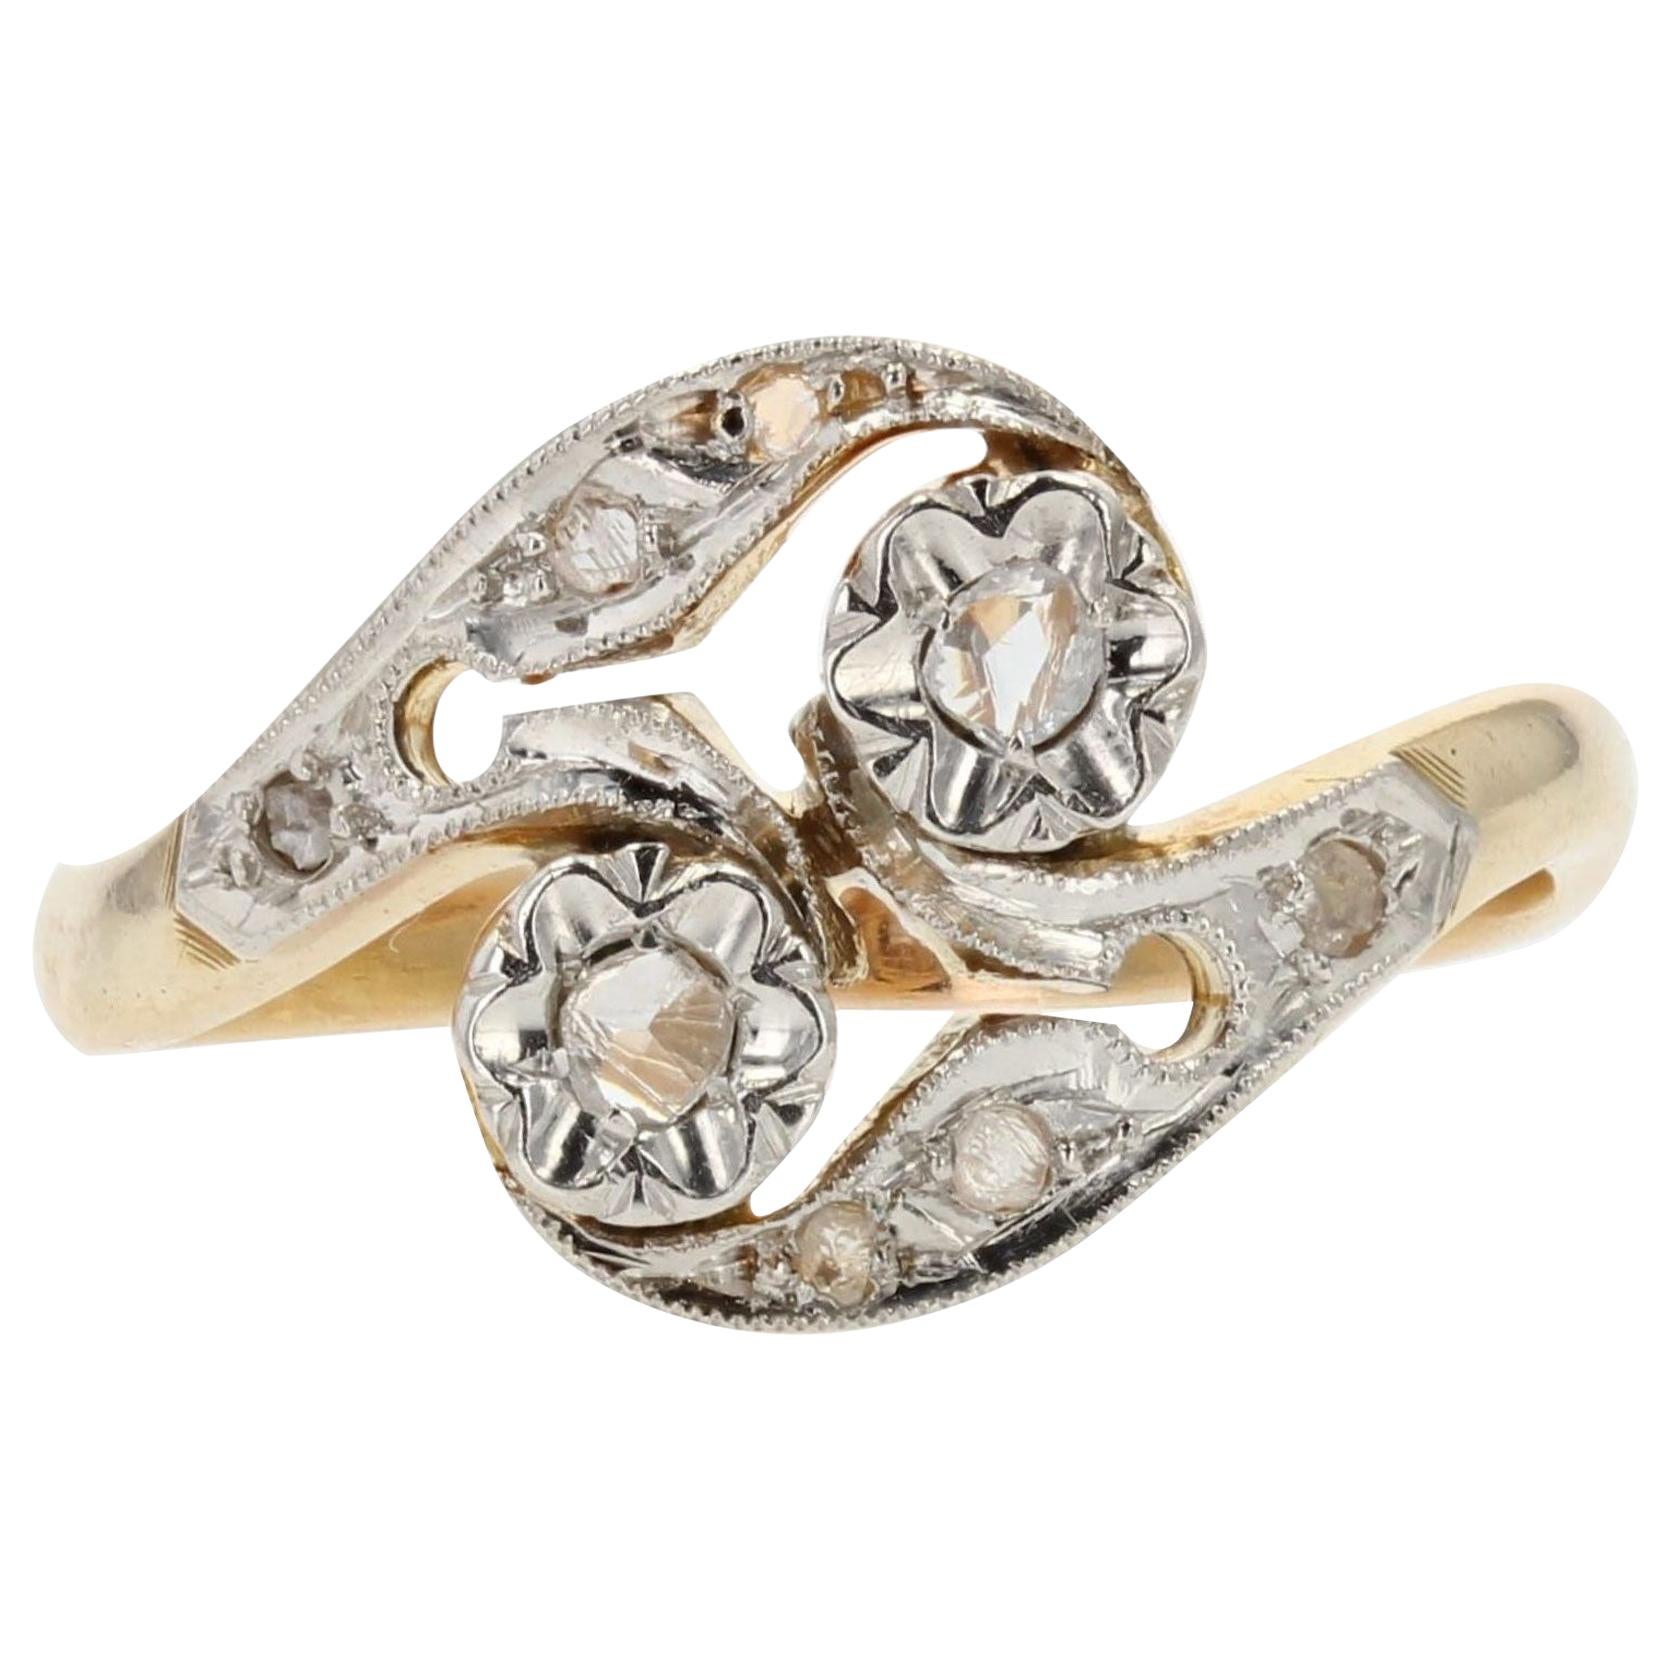 French 1920s Belle Époque Diamonds 18 Karat Yellow White Gold Ring